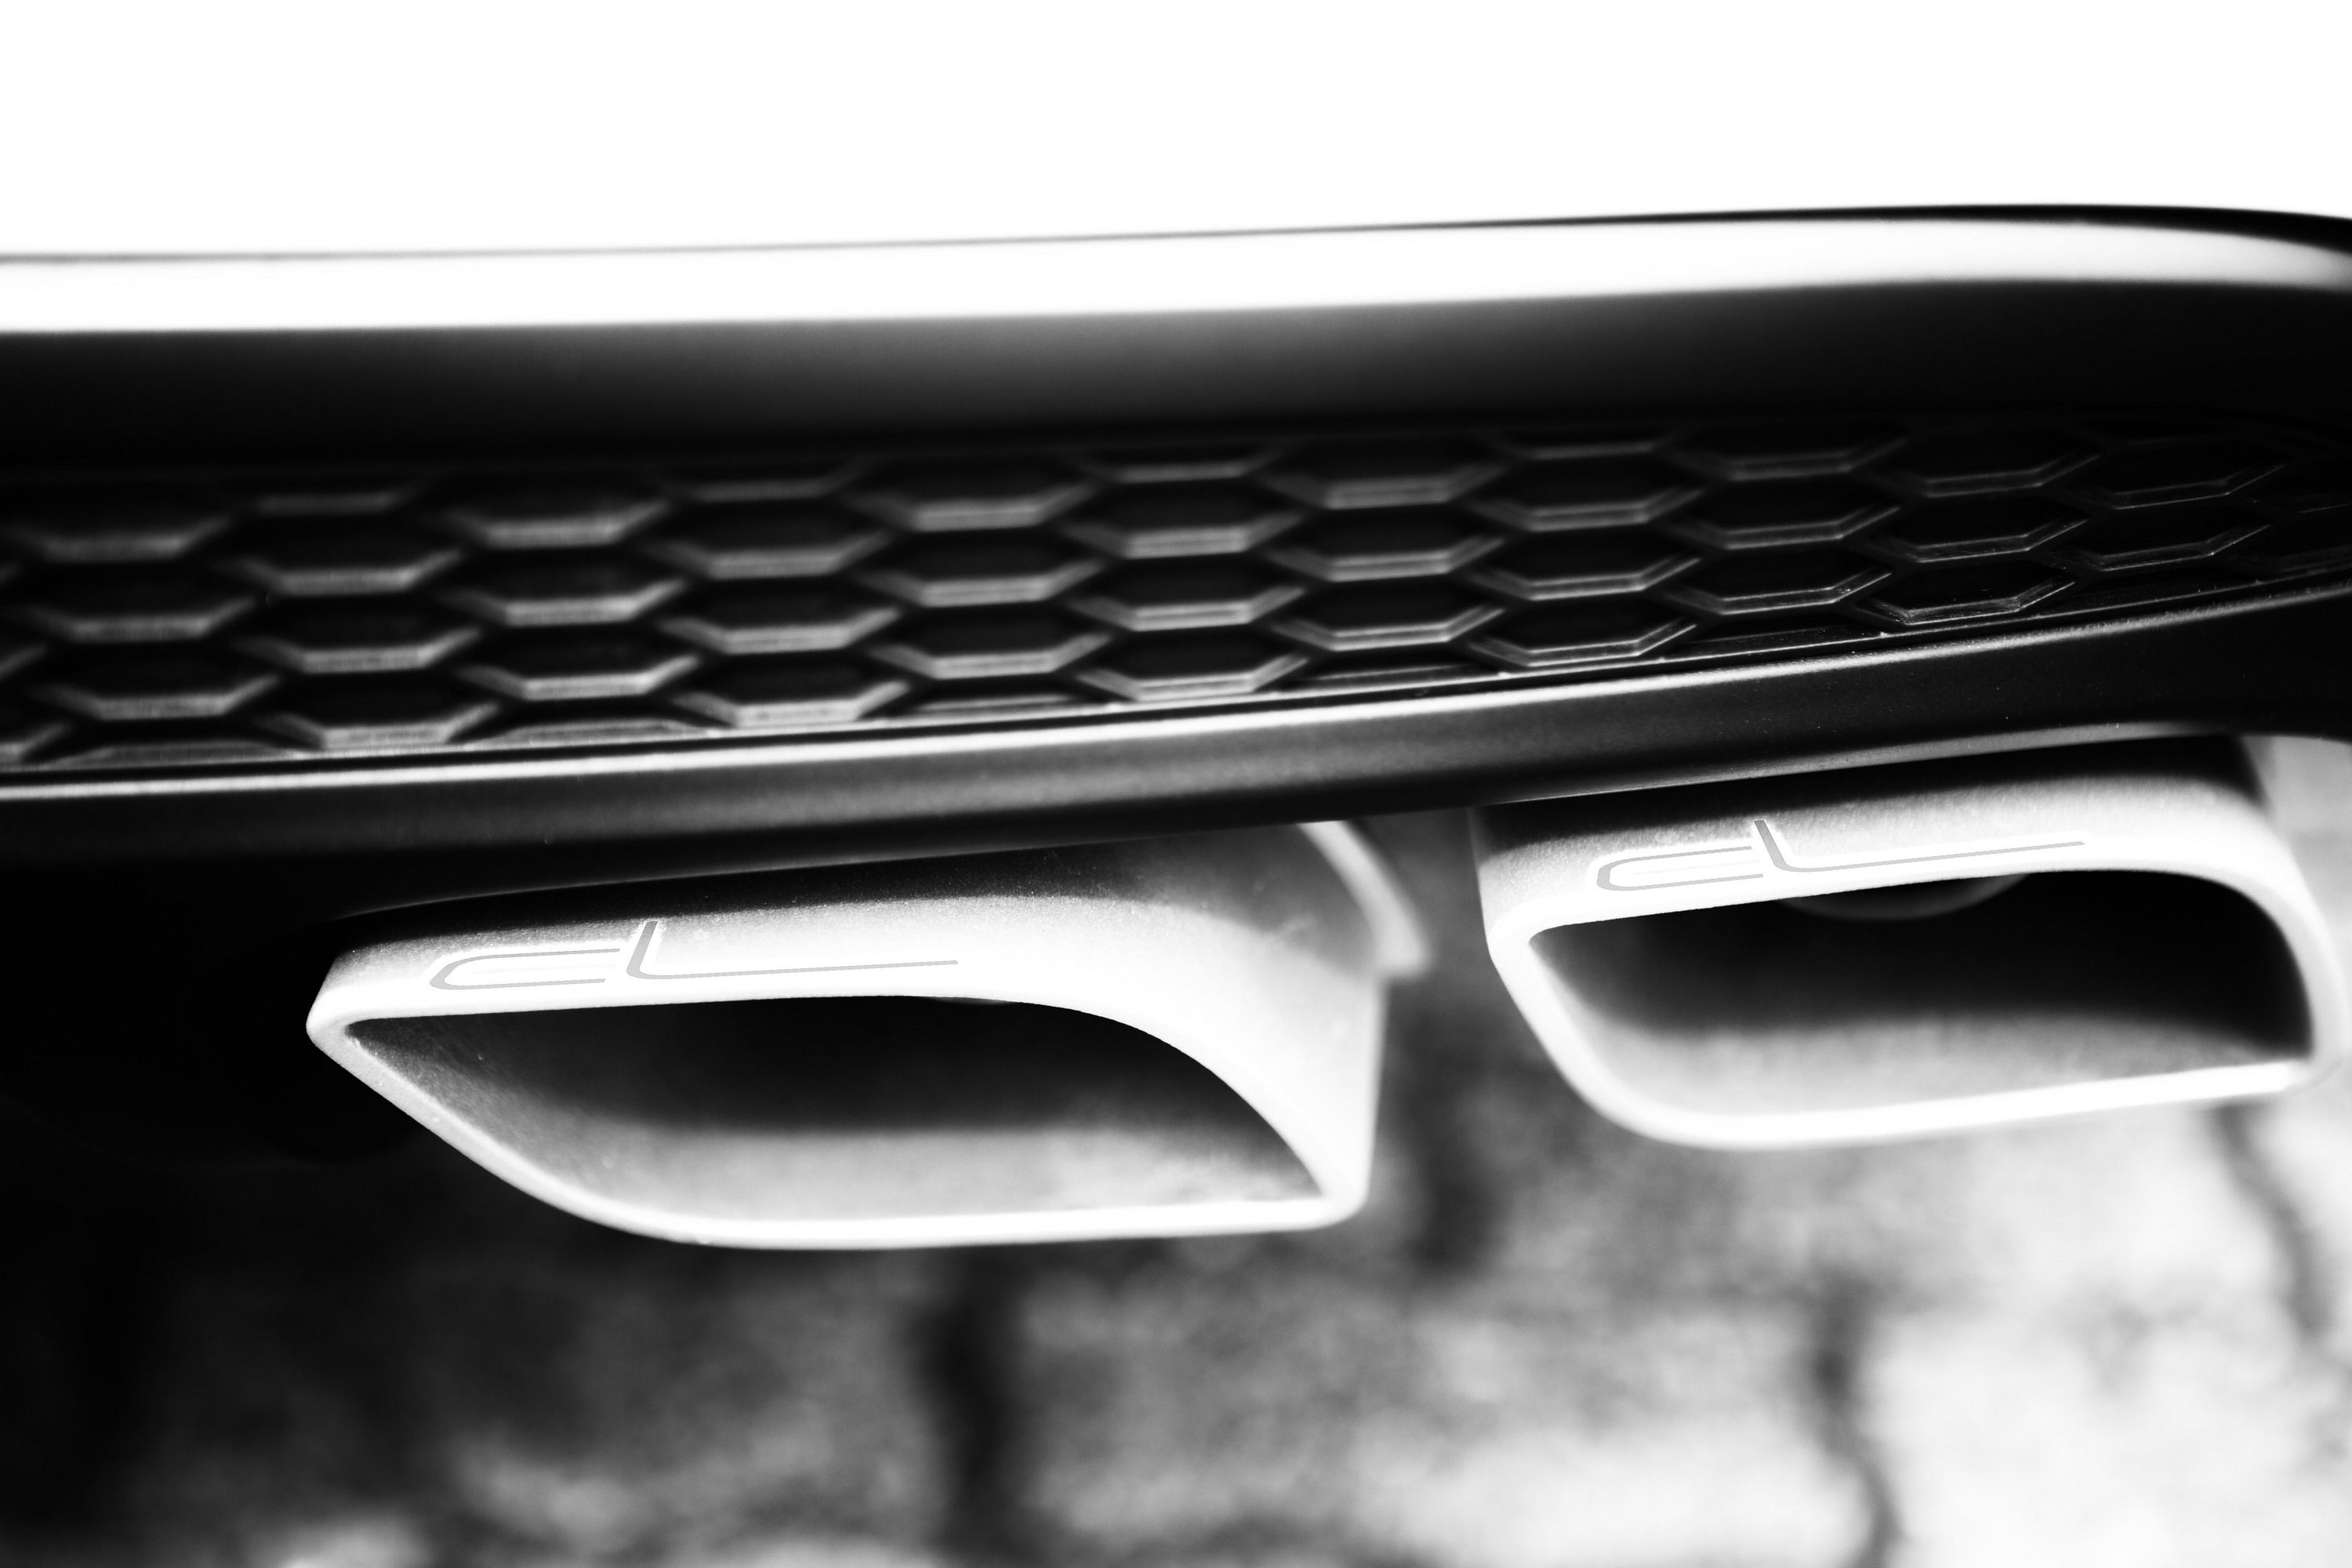 2016 Audi Q7 3.0 TDI by CL by Christian Lübke